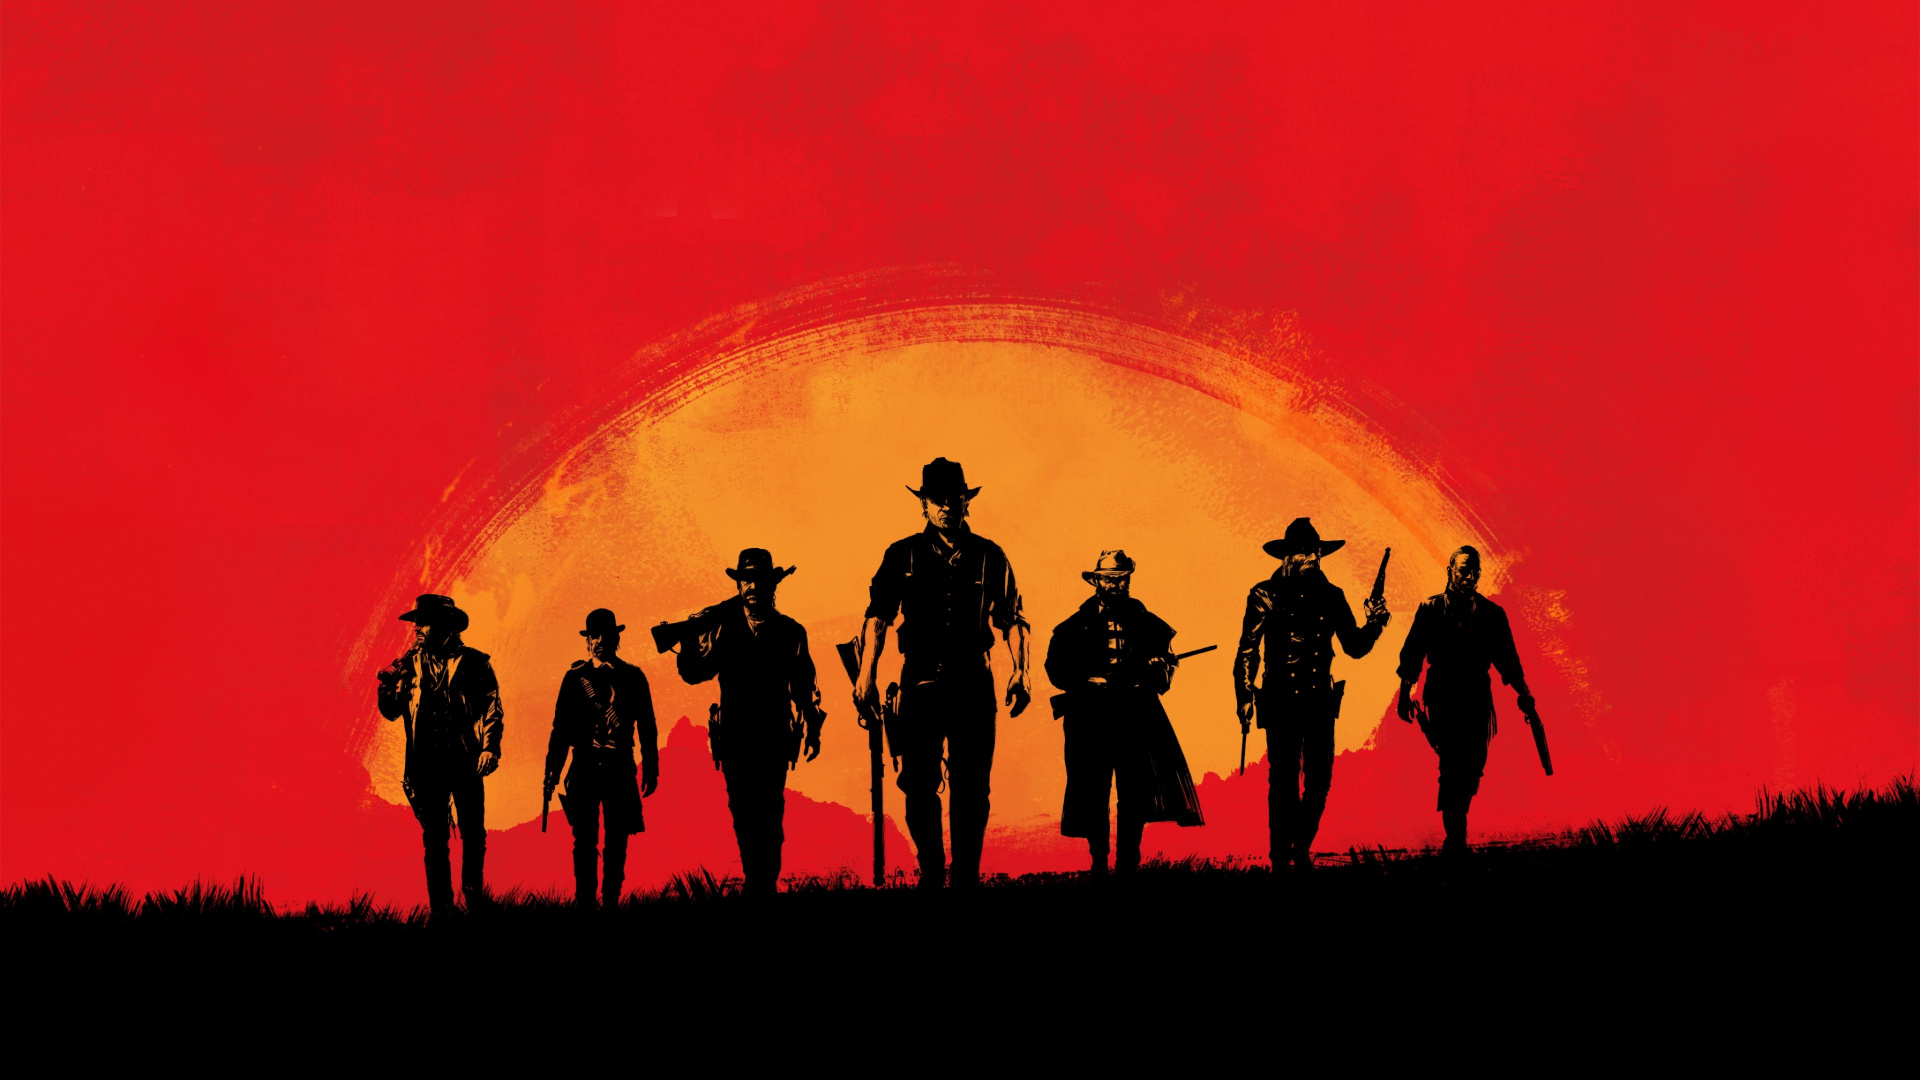 Red Dead Redemption 2, Red Dead Redemption, Rockstar Games, Silhouette, Illustration. Wallpaper in 1920x1080 Resolution